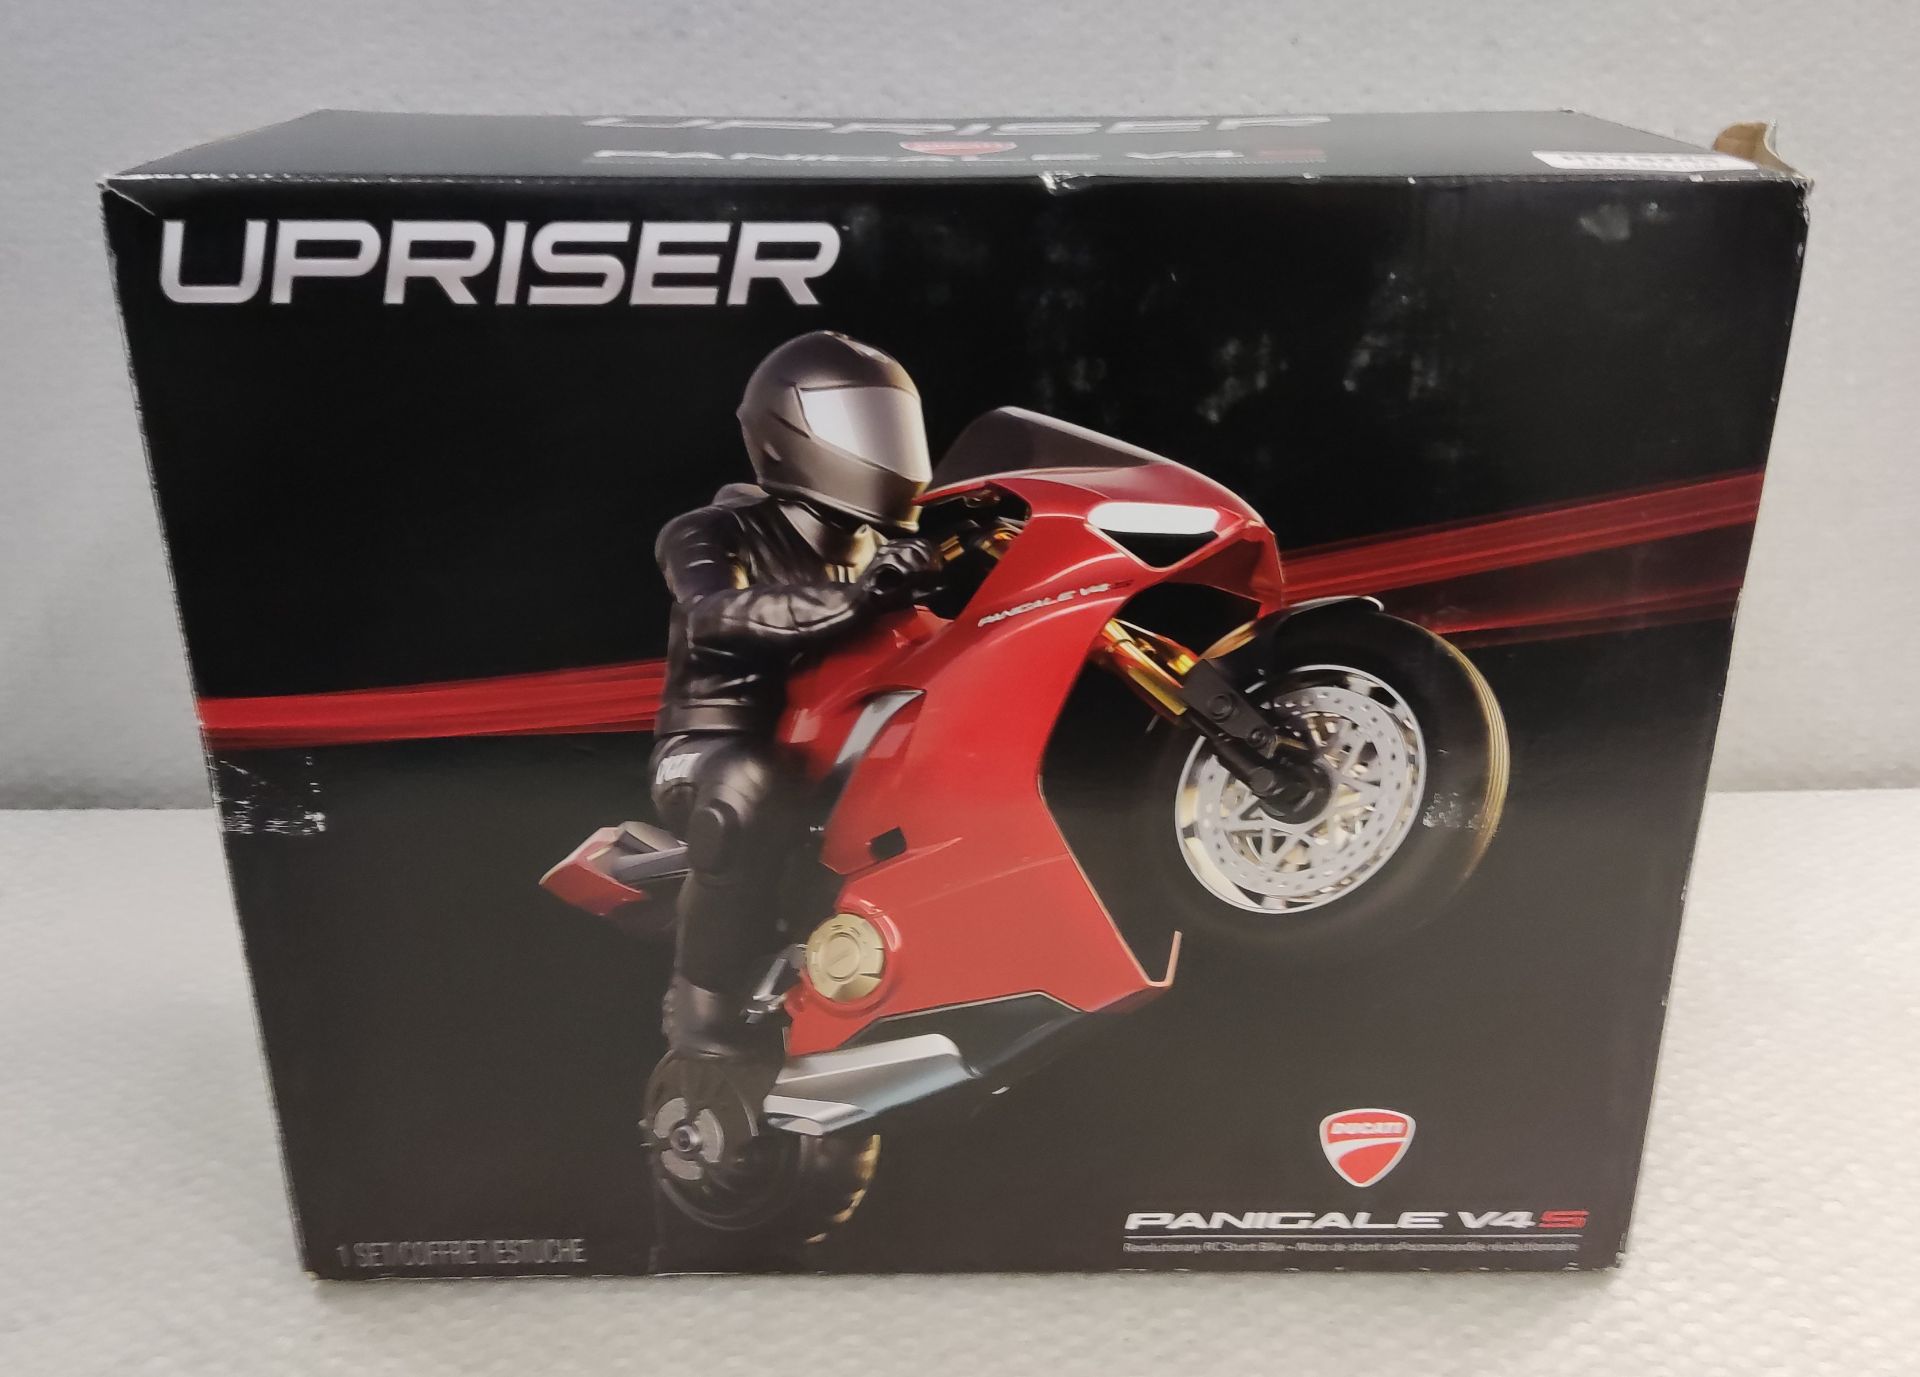 1 x Ducati Panigale V4S Upriser R/C Bike - New/Boxed - Image 2 of 9